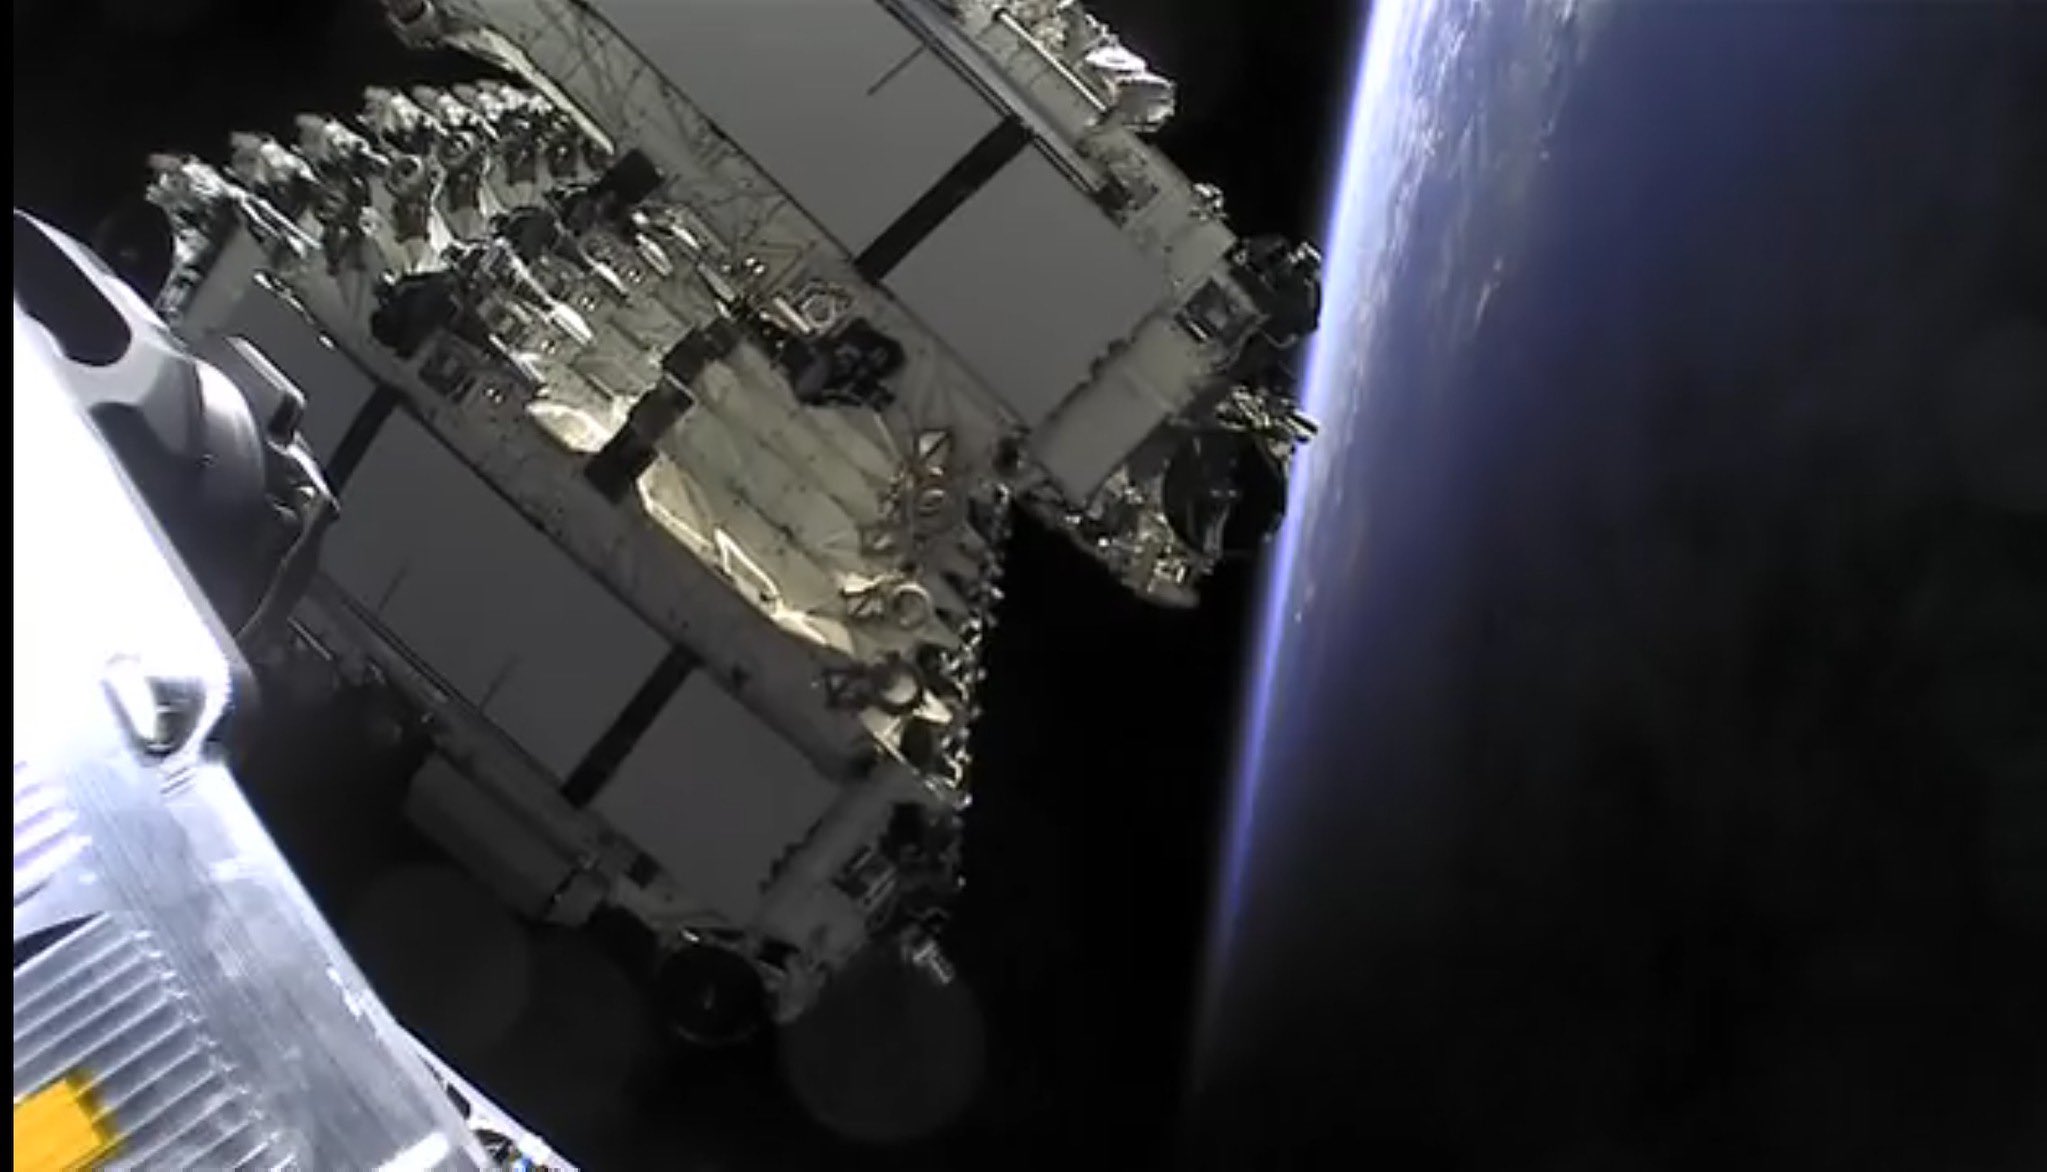 Satelity Starlink na orbicie (Źródło: Elon Musk)